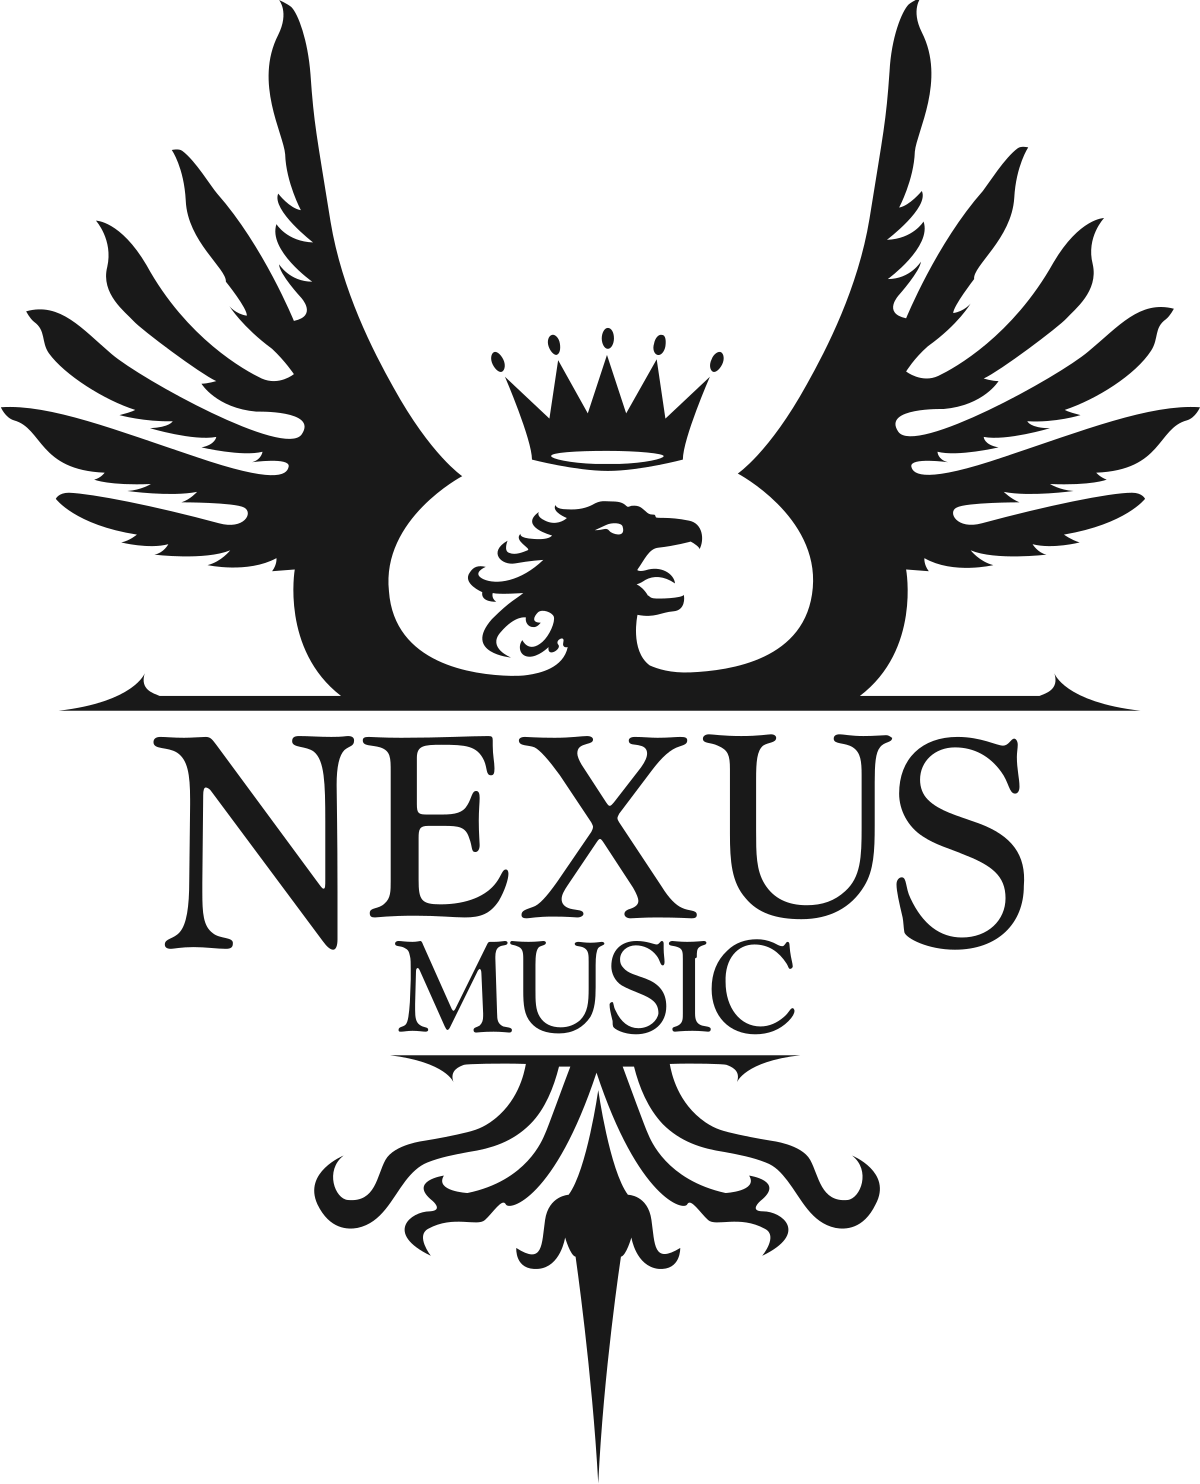 Nexus Wikipedia